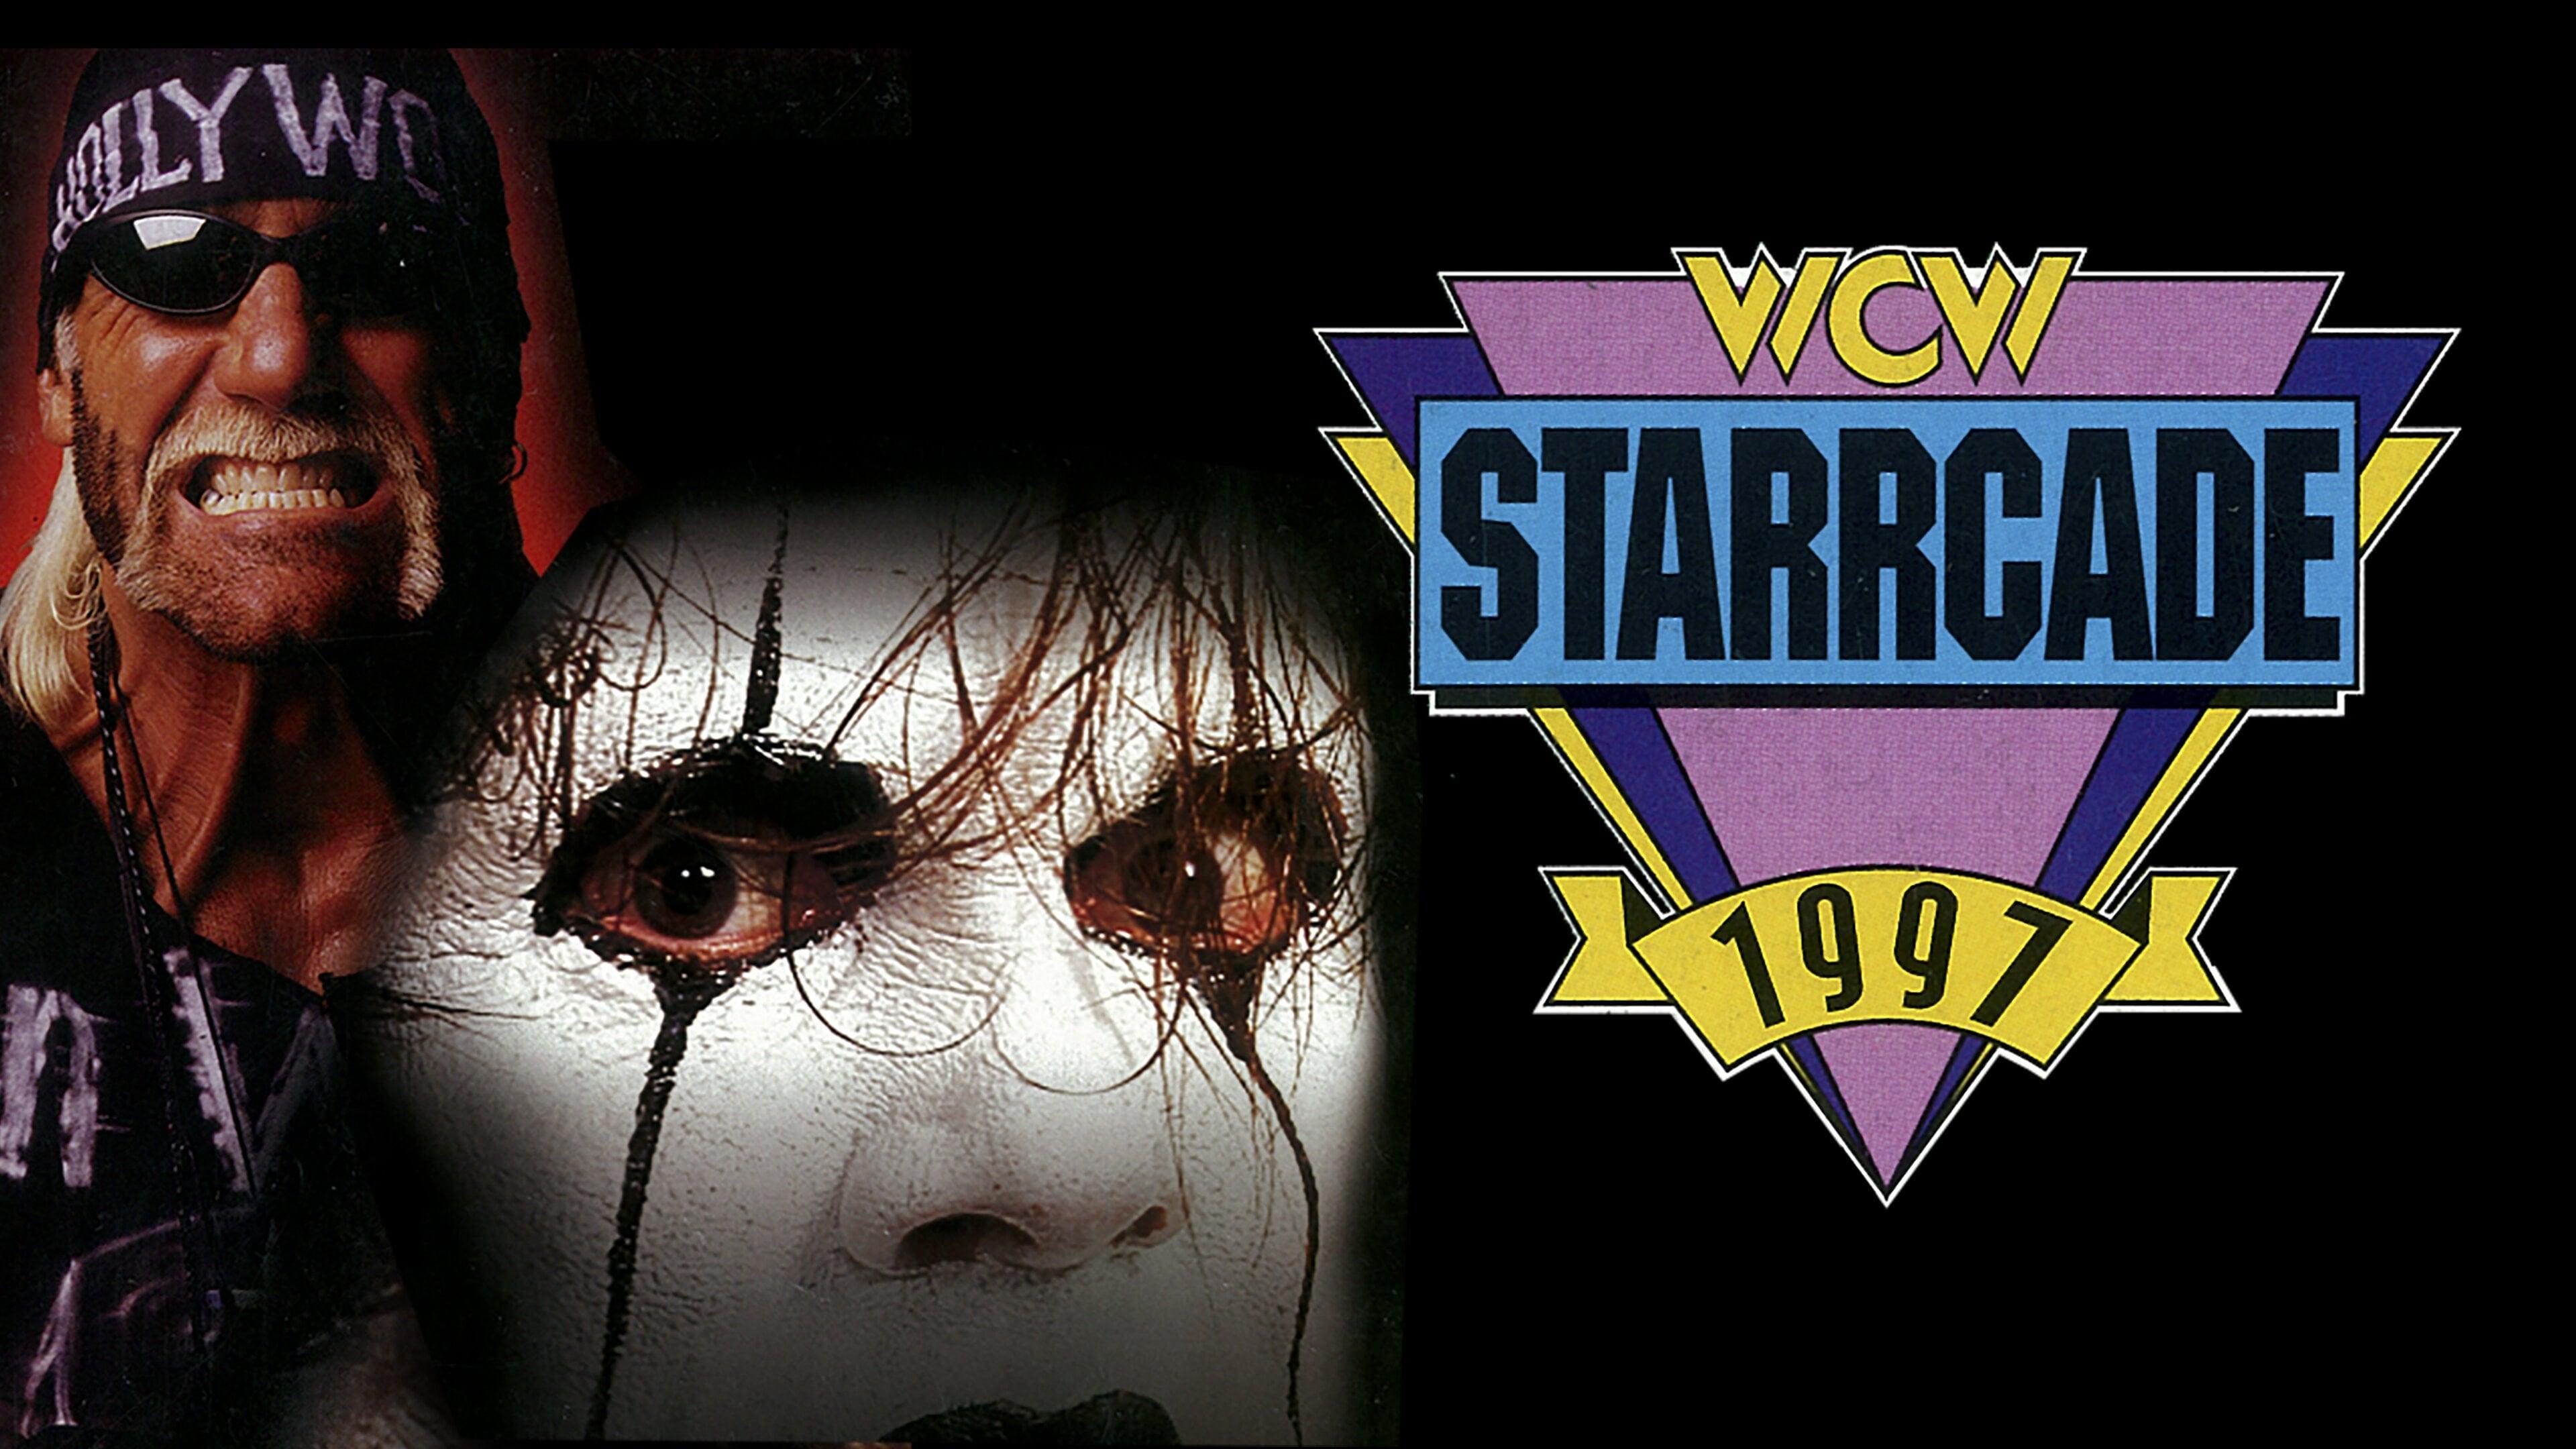 WCW Starrcade 1997 backdrop